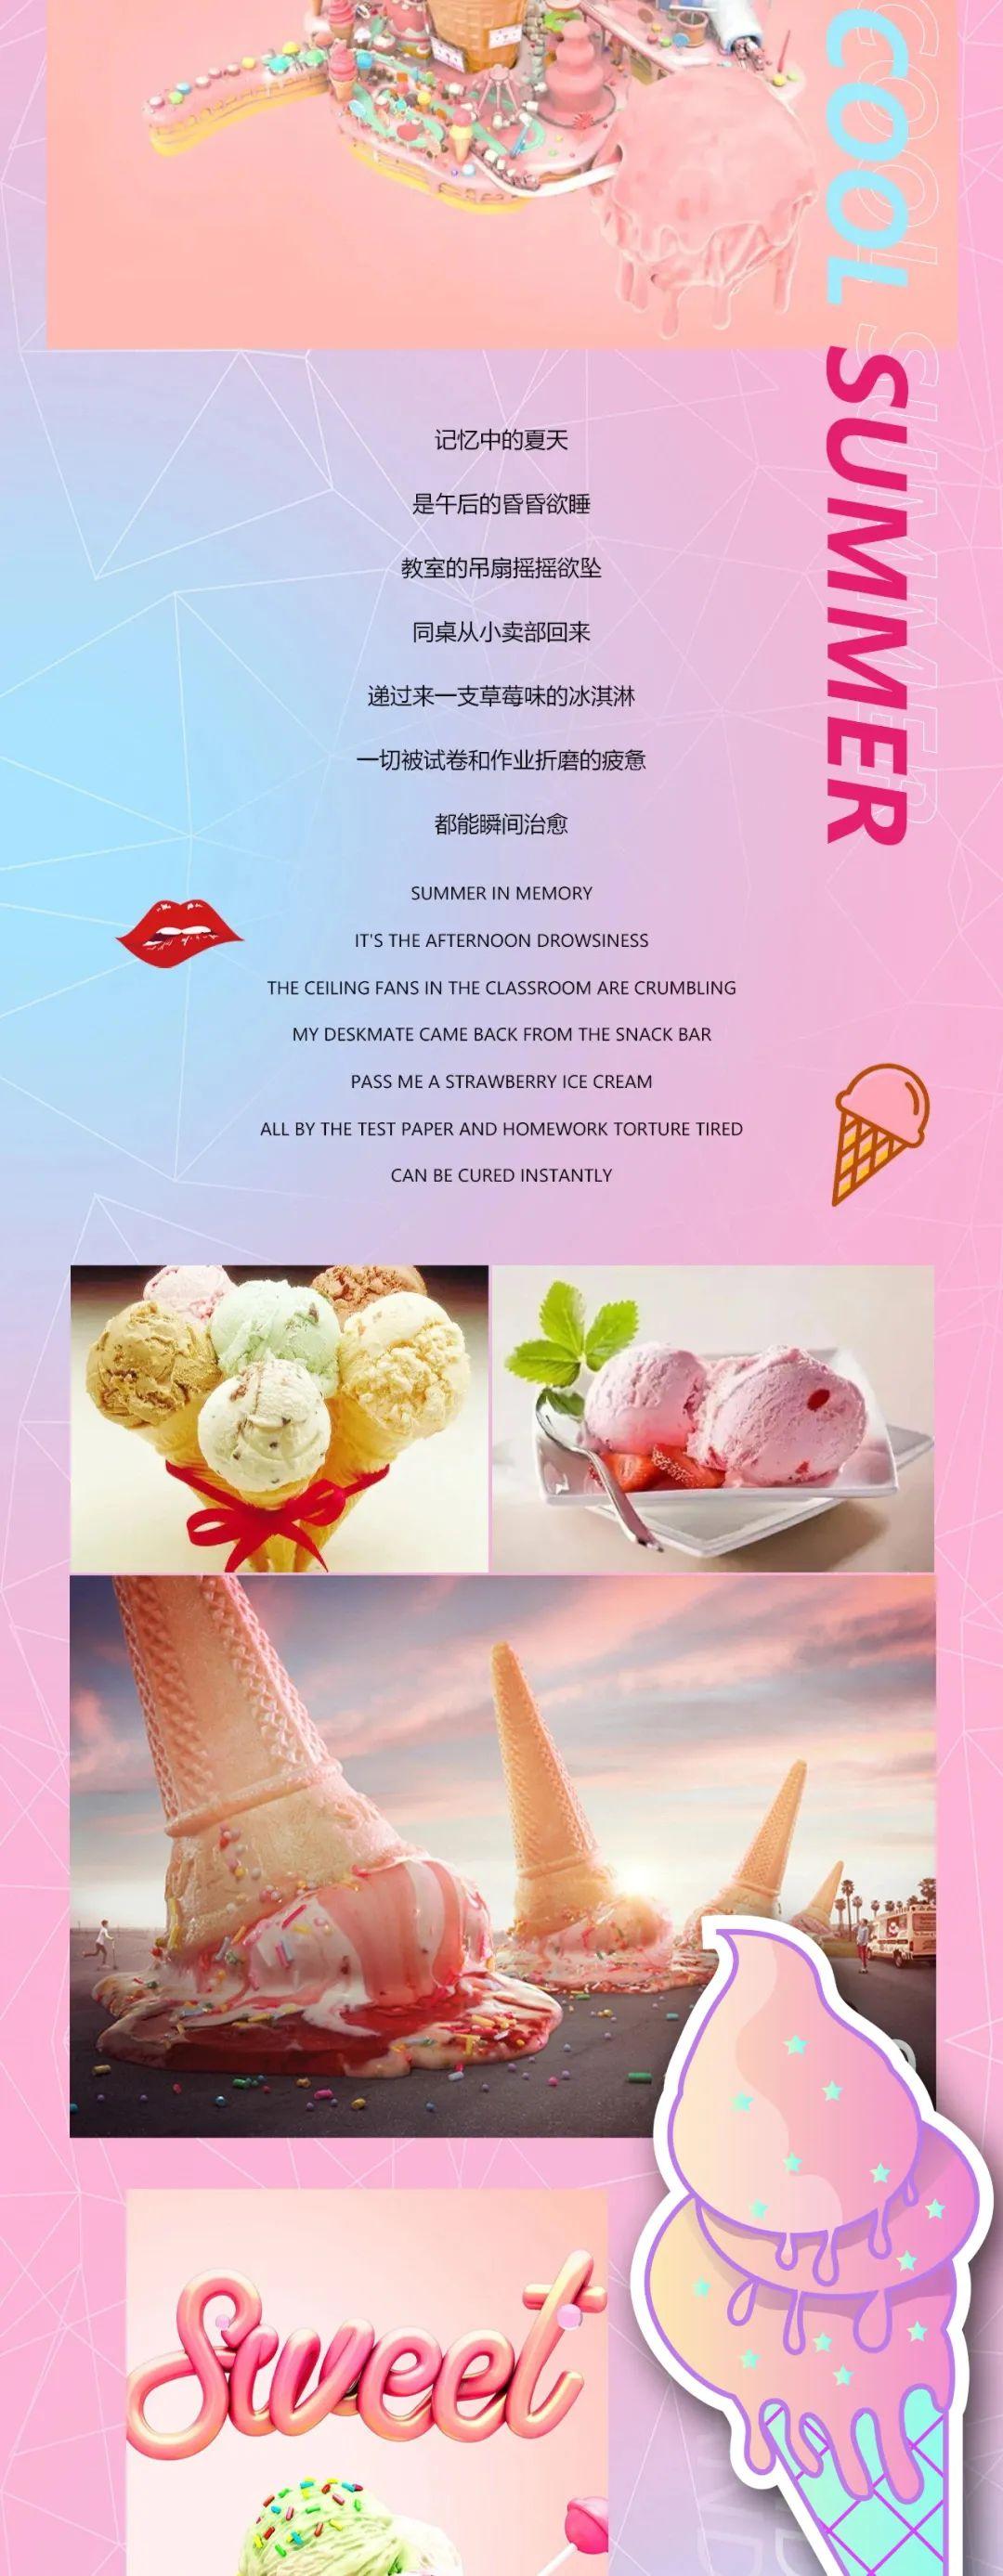 2021/04/09-10 M-SHOW夏日冰淇淋主题派对，融化你的不开心！-昆明M·show 米秀酒吧 昆明